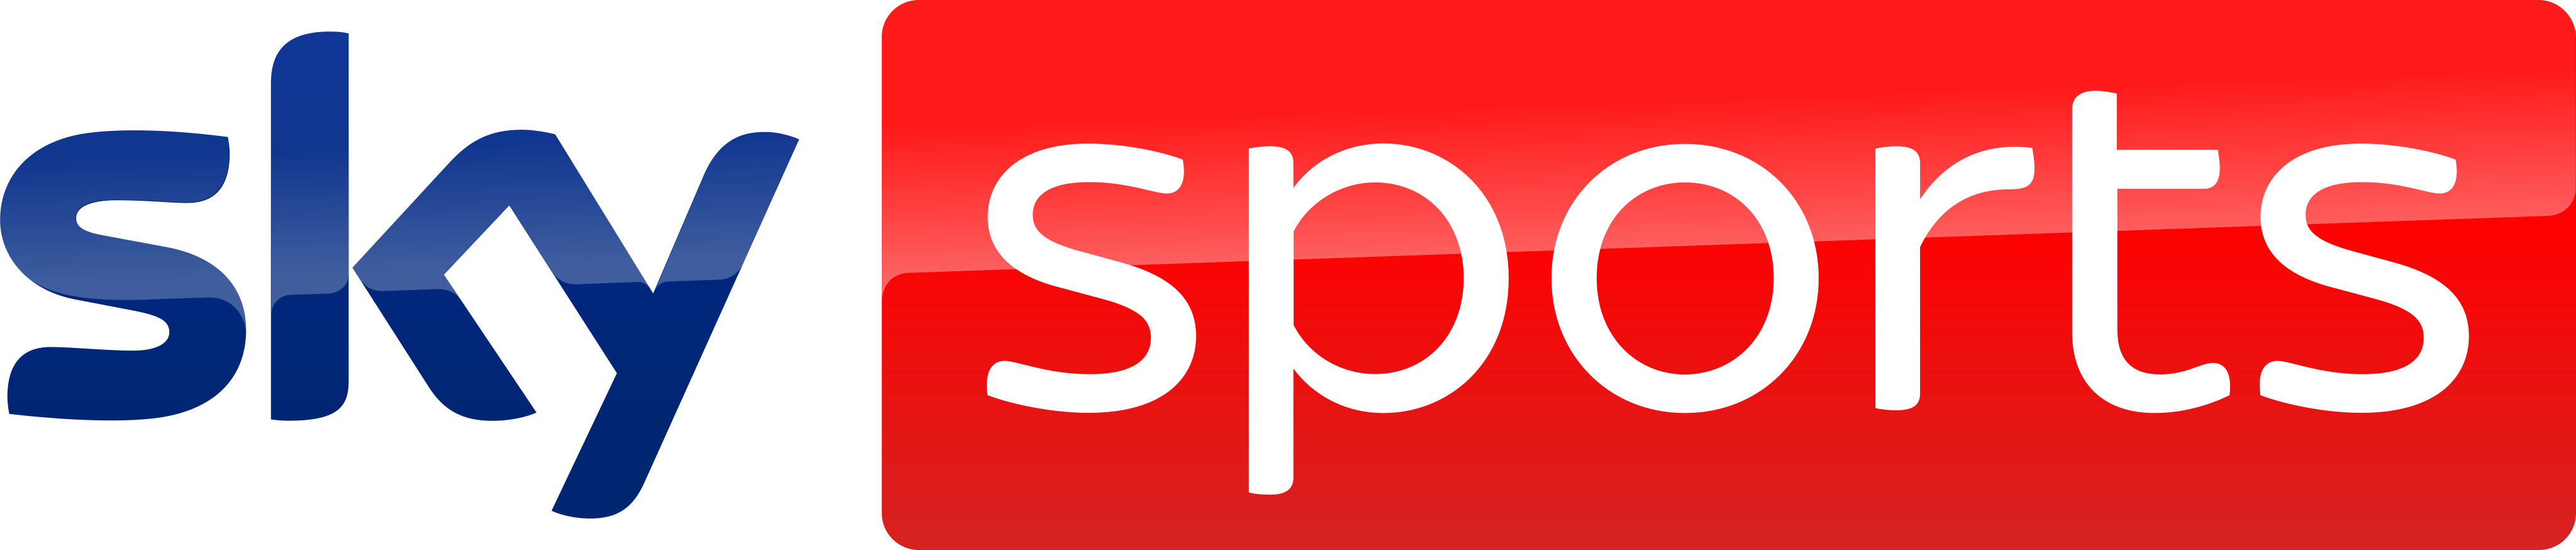 sky sports logo 5 - Sky Sports Logo